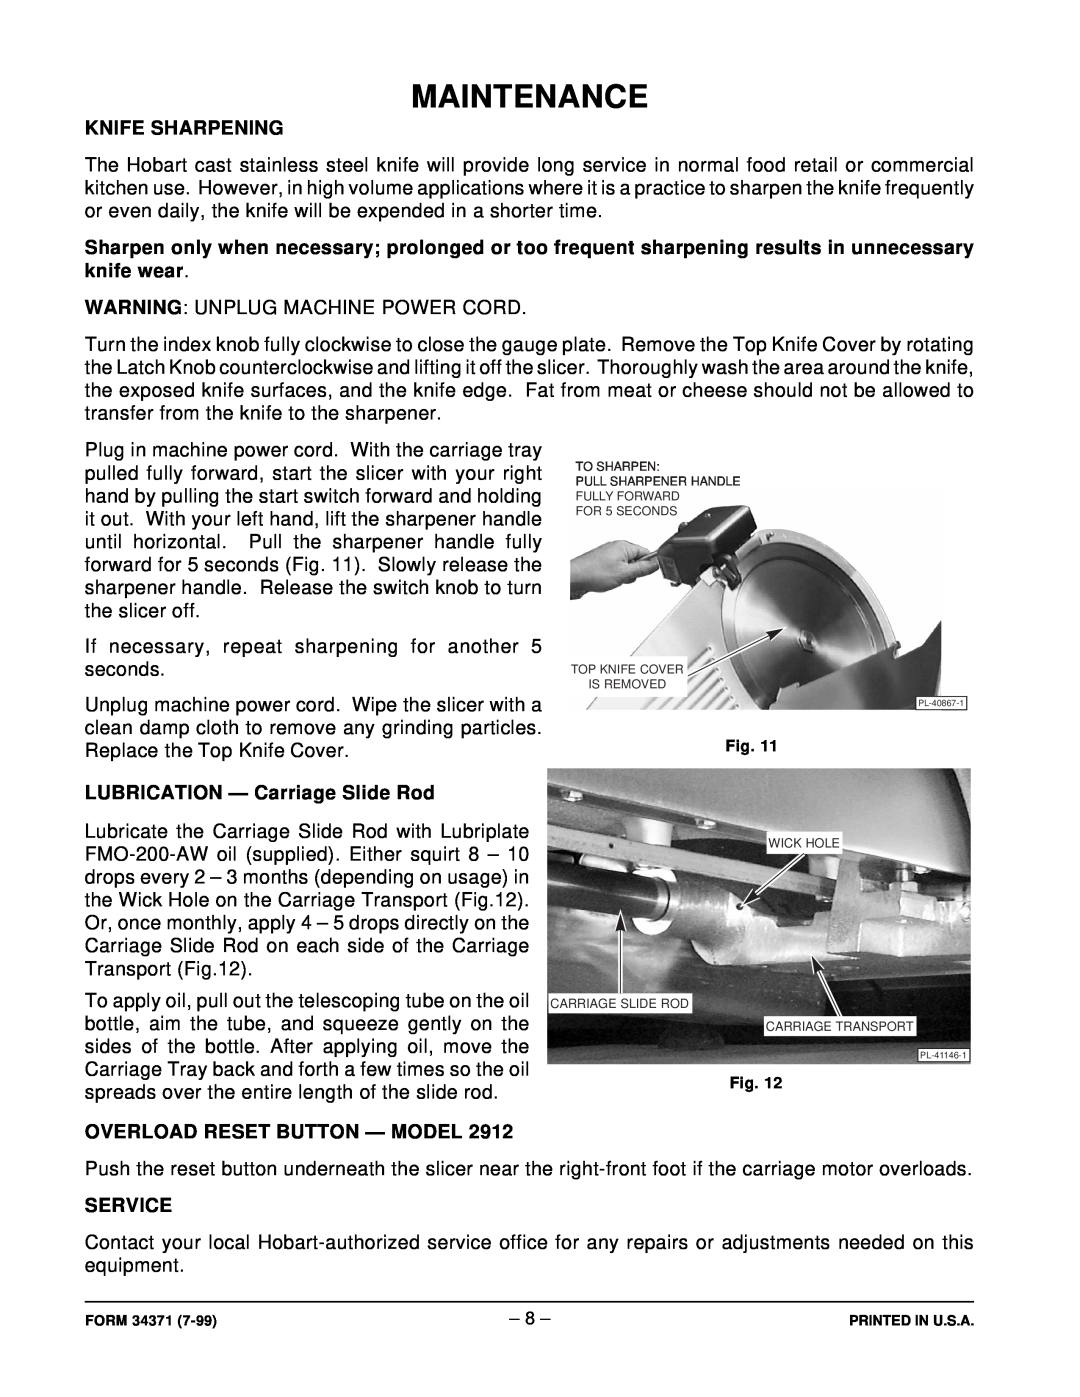 Hobart 2912 manual Maintenance, Knife Sharpening, LUBRICATION - Carriage Slide Rod, Overload Reset Button - Model, Service 